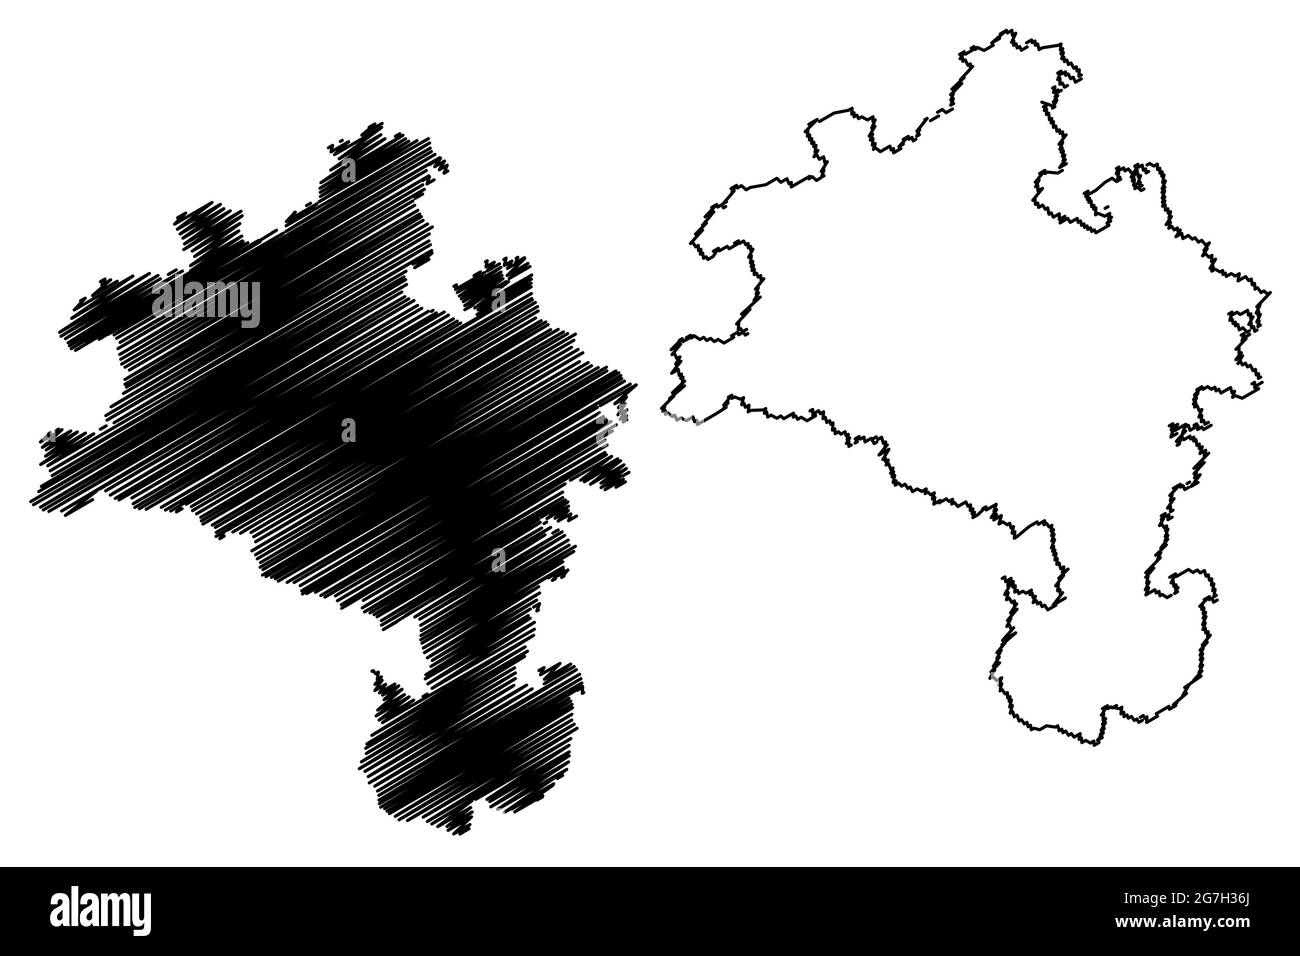 Kassel region (Federal Republic of Germany, State of Hessen, Hesse, Hessia) map vector illustration, scribble sketch Kassel map Stock Vector